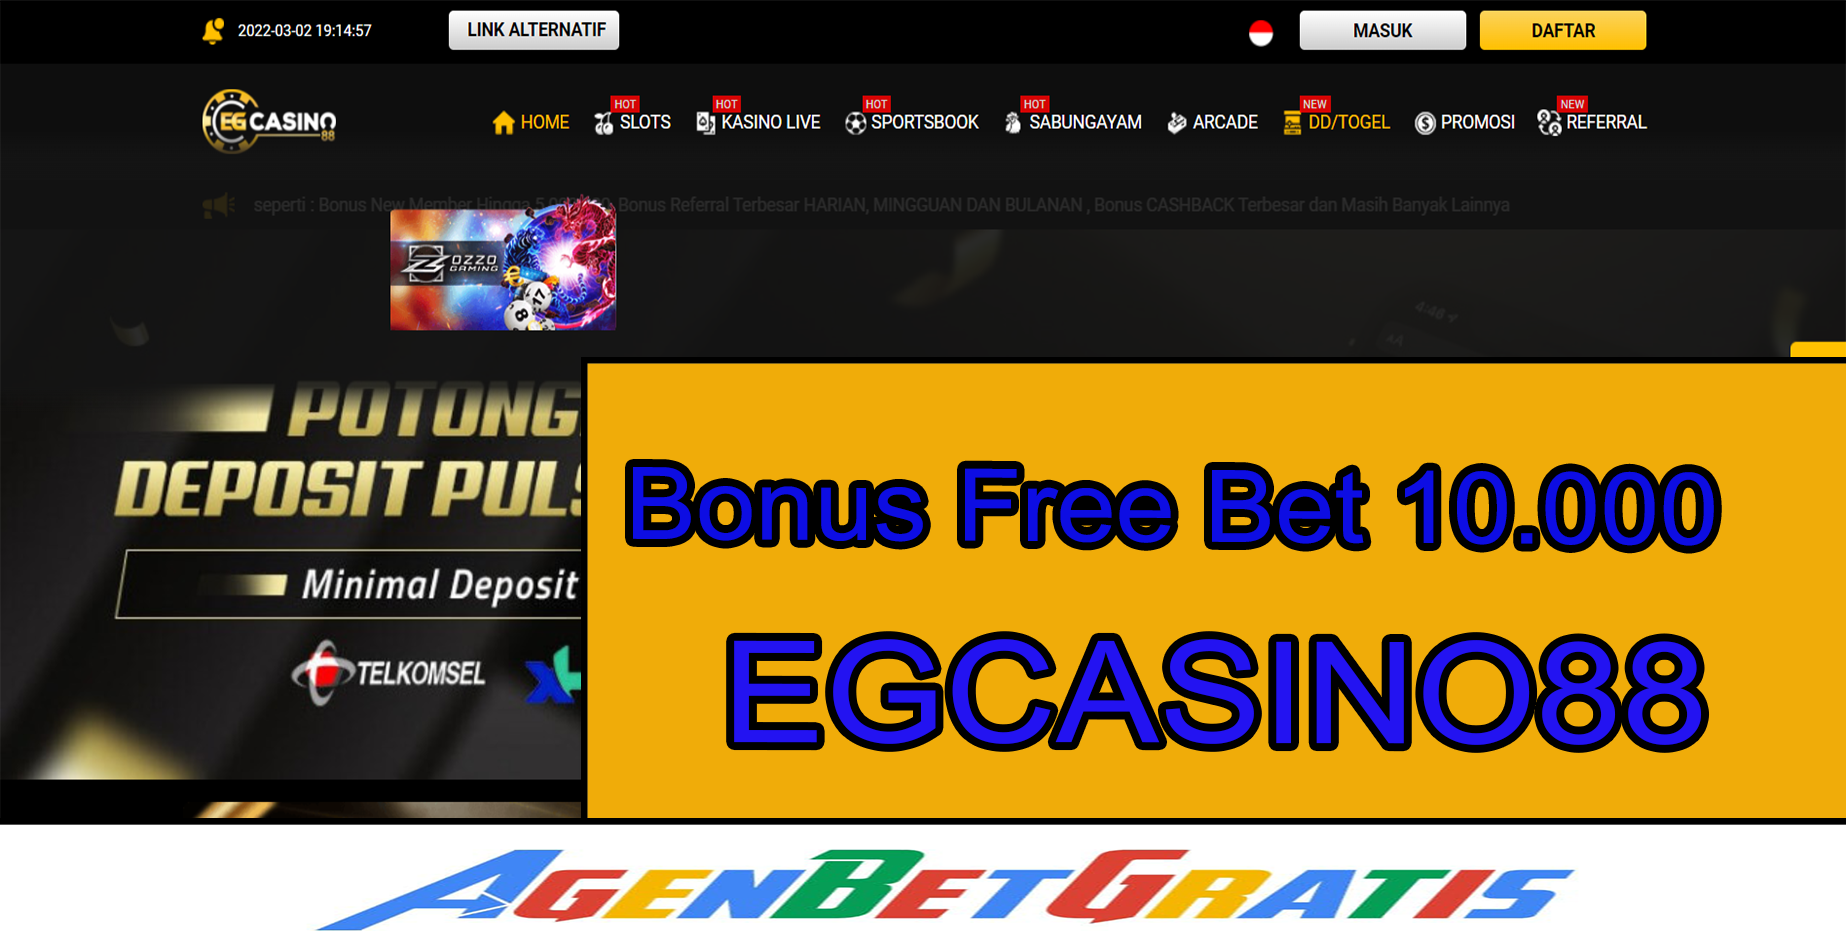 EGCASINO88 - Bonus FreeBet 10.000